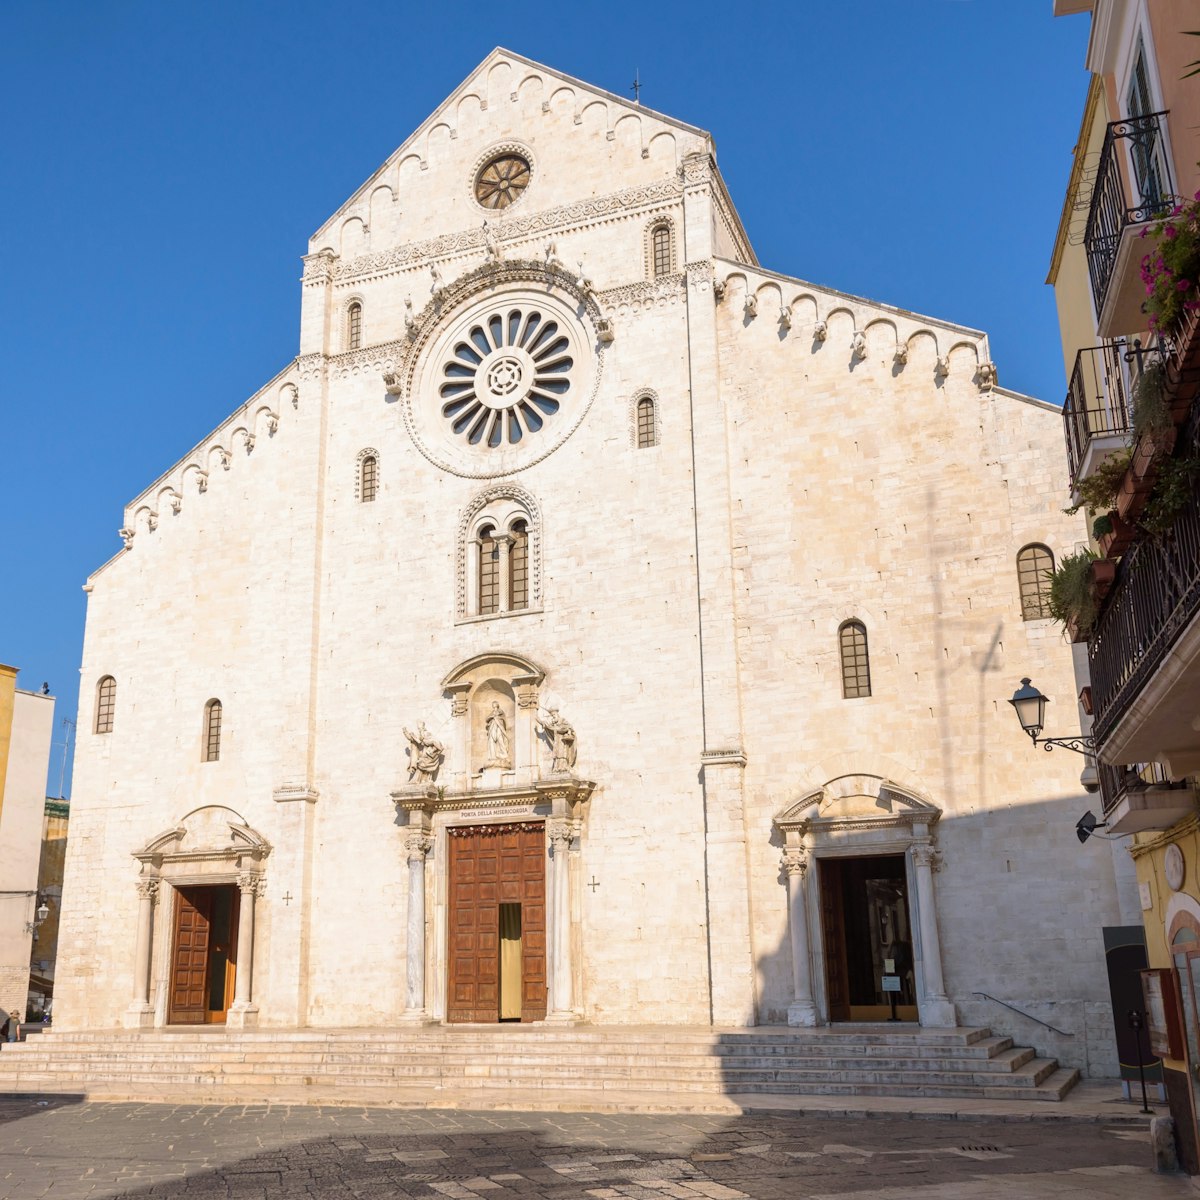 Facade of the Cathedral of San Sabino in Bari, Apulia, Italy